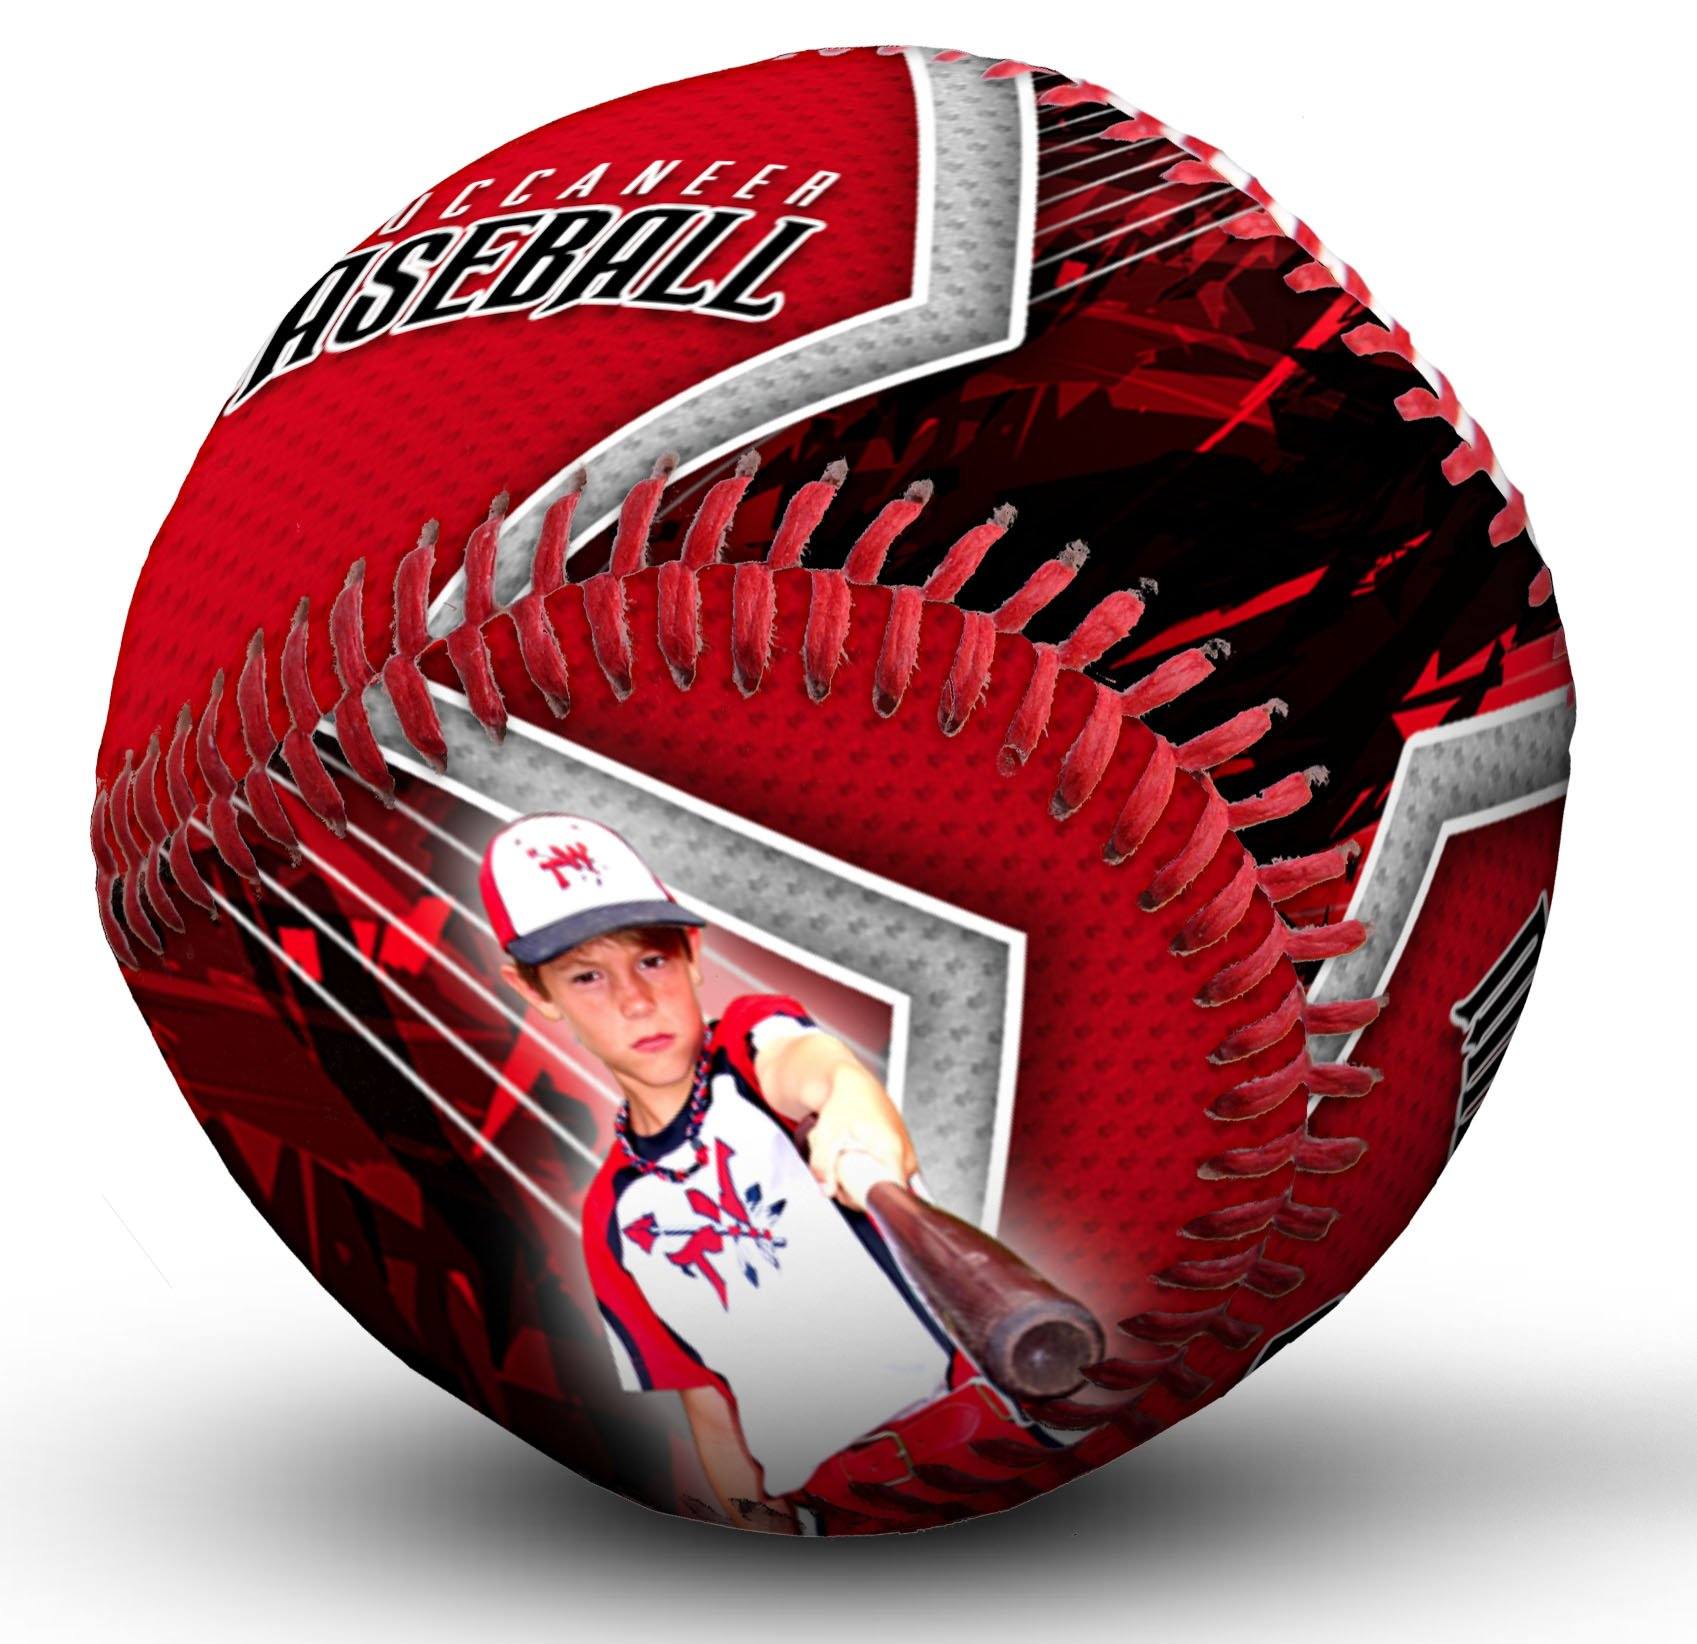 Breaker - V.1 - Baseball - Make-A-Ball Photoshop Template-Photoshop Template - PSMGraphix